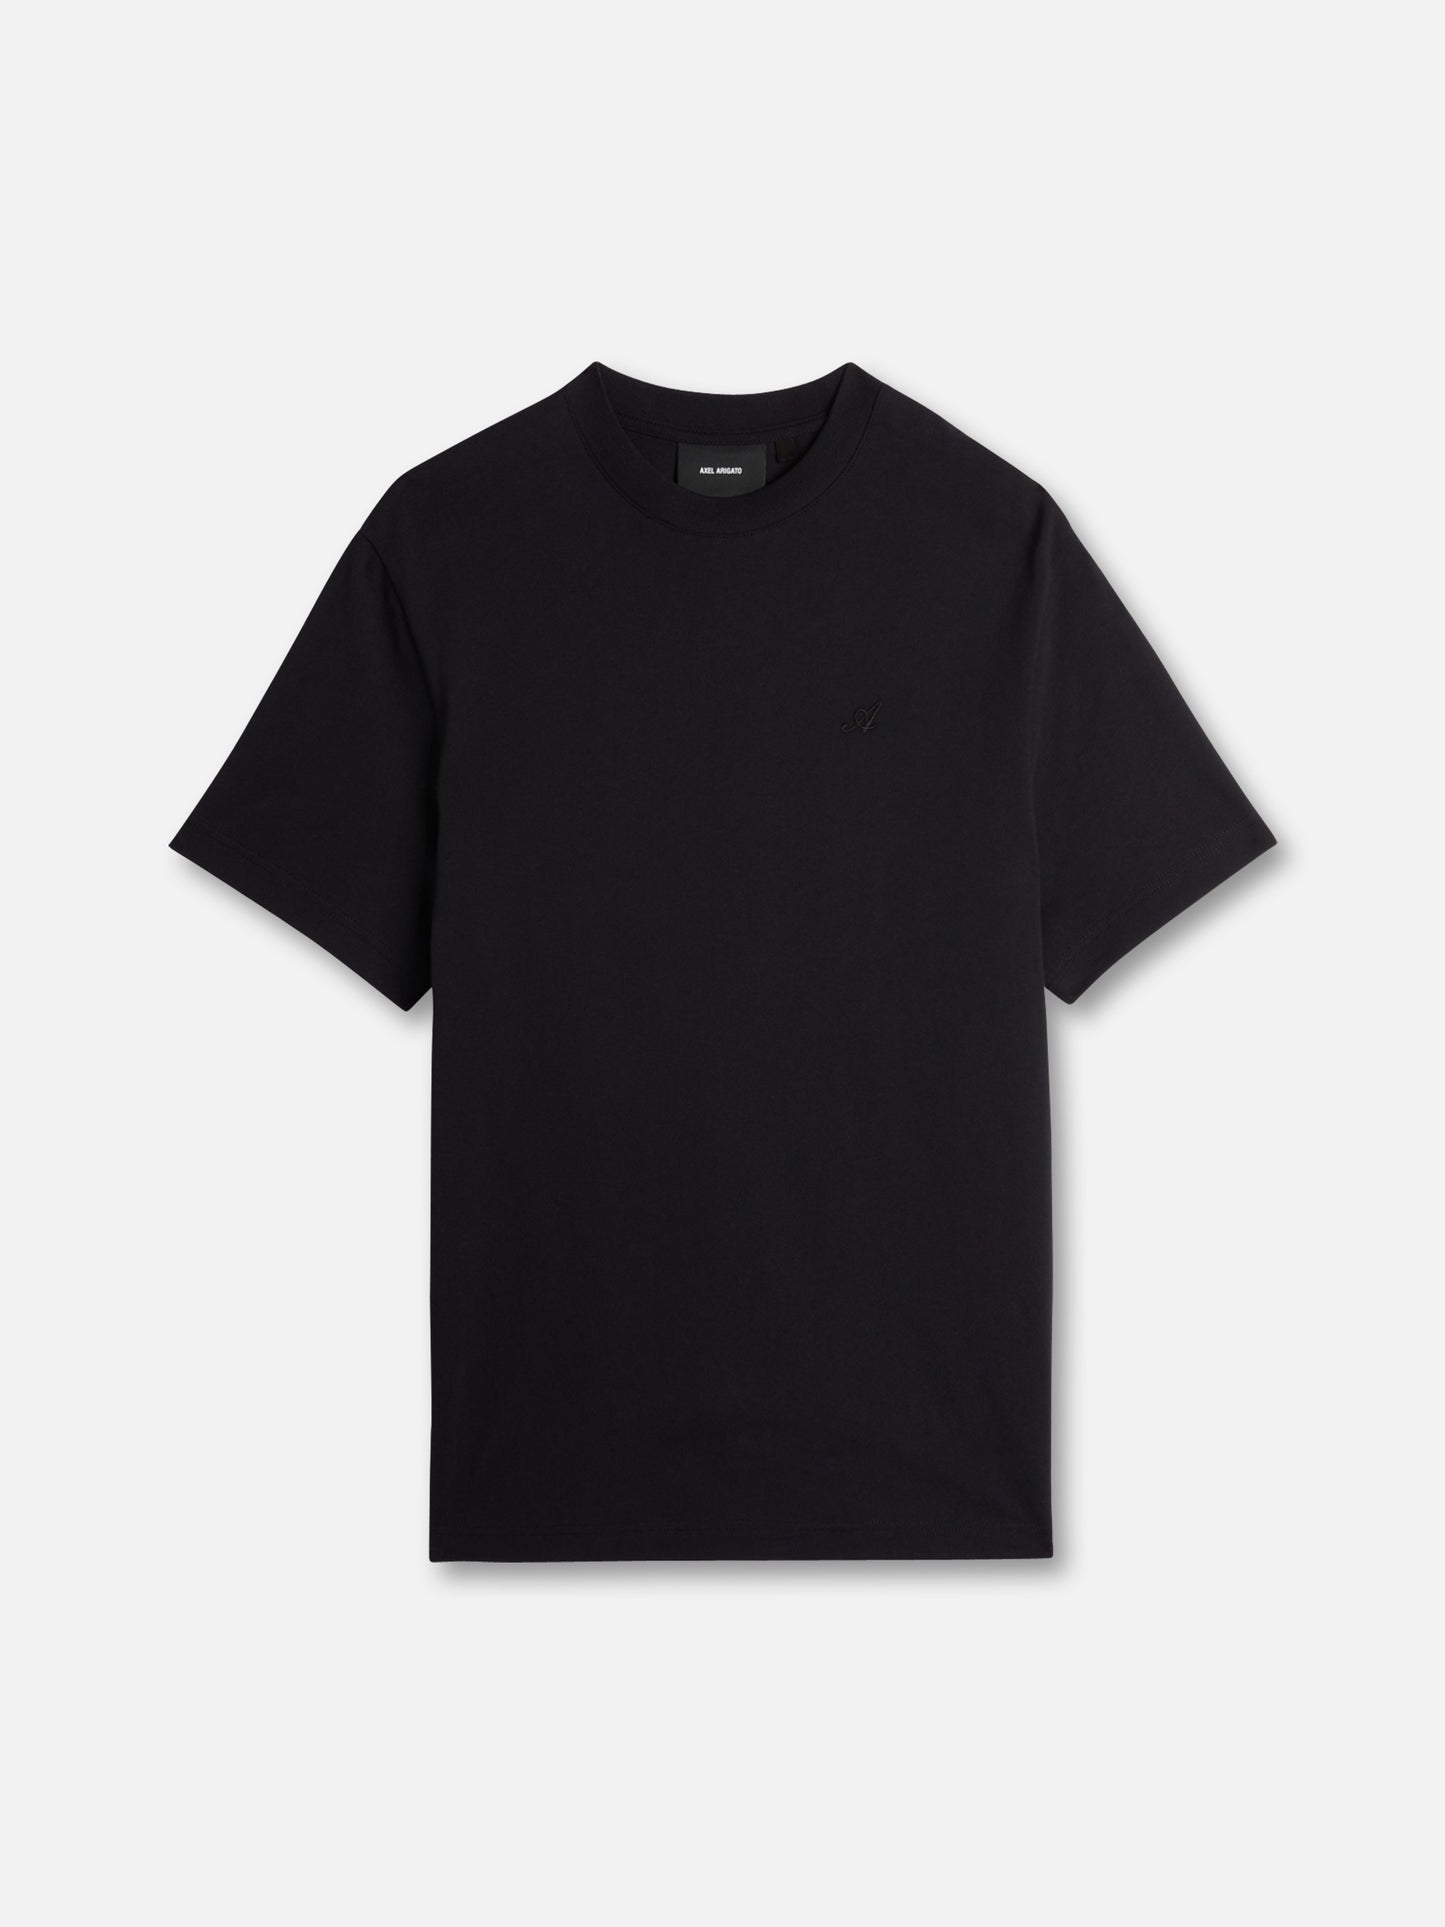 AXEL ARIGATO - Tonal Signature T-Shirt